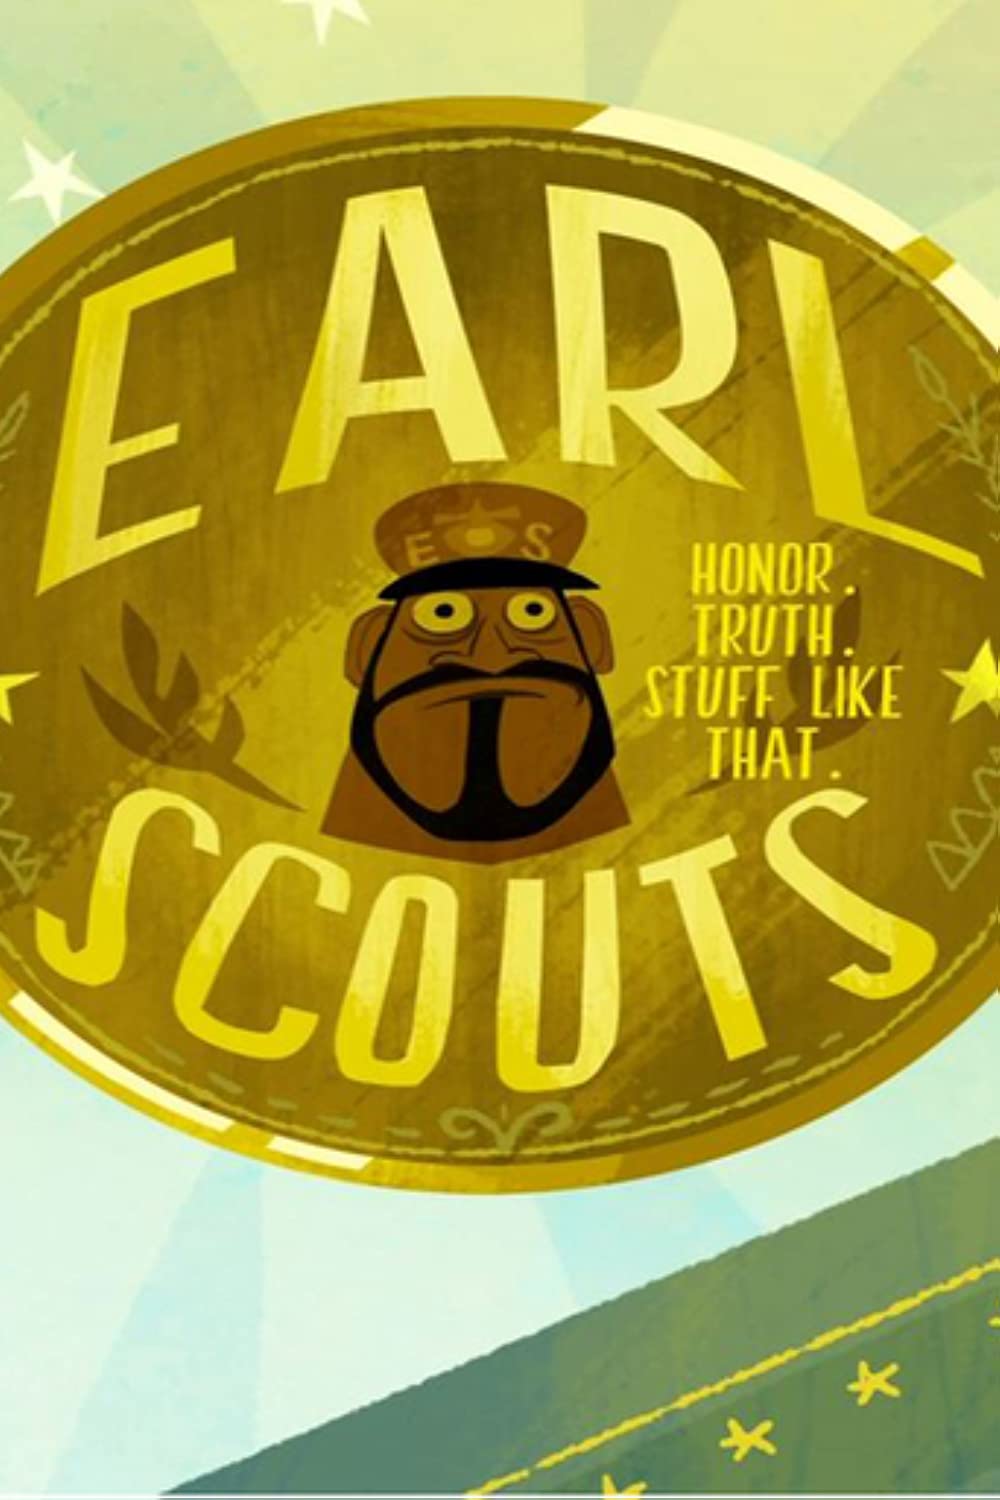 عملیات مامور ارل (Earl Scouts)